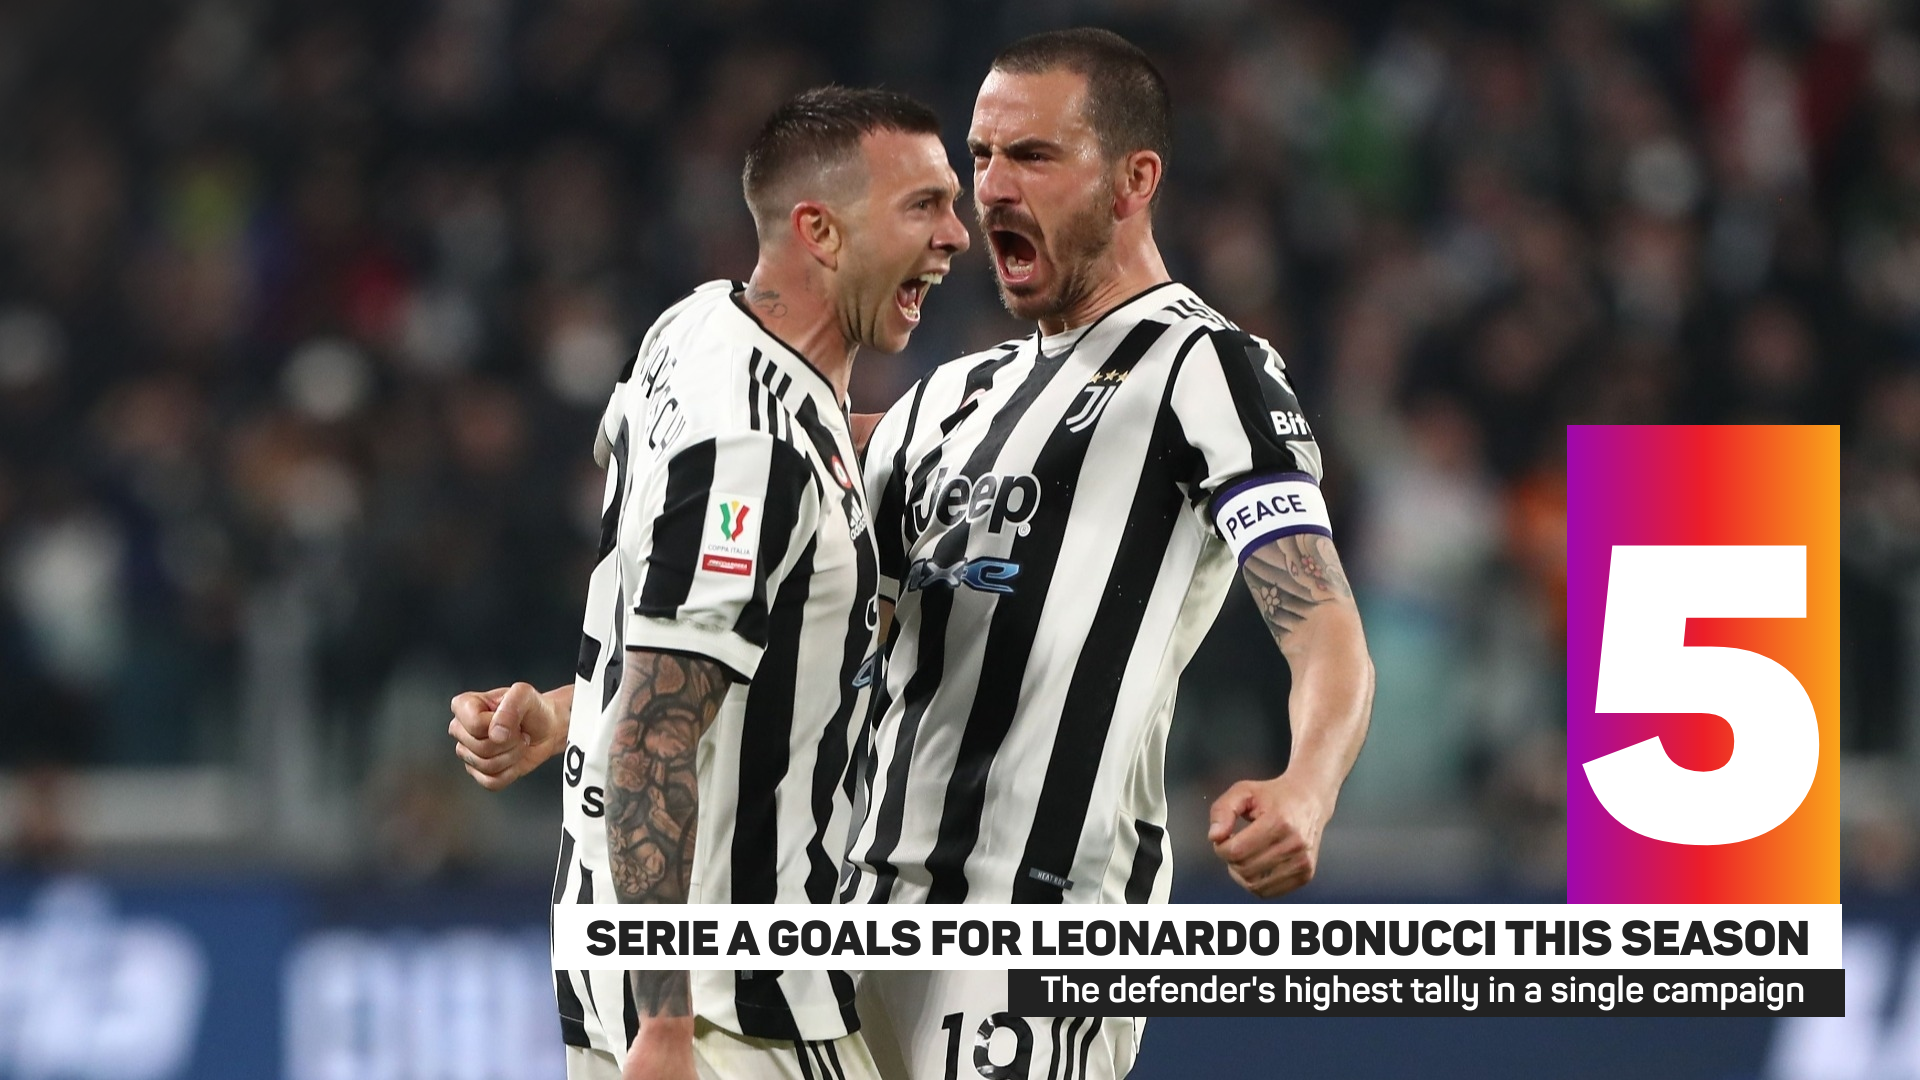 Leonardo Bonucci has five Serie A goals this season